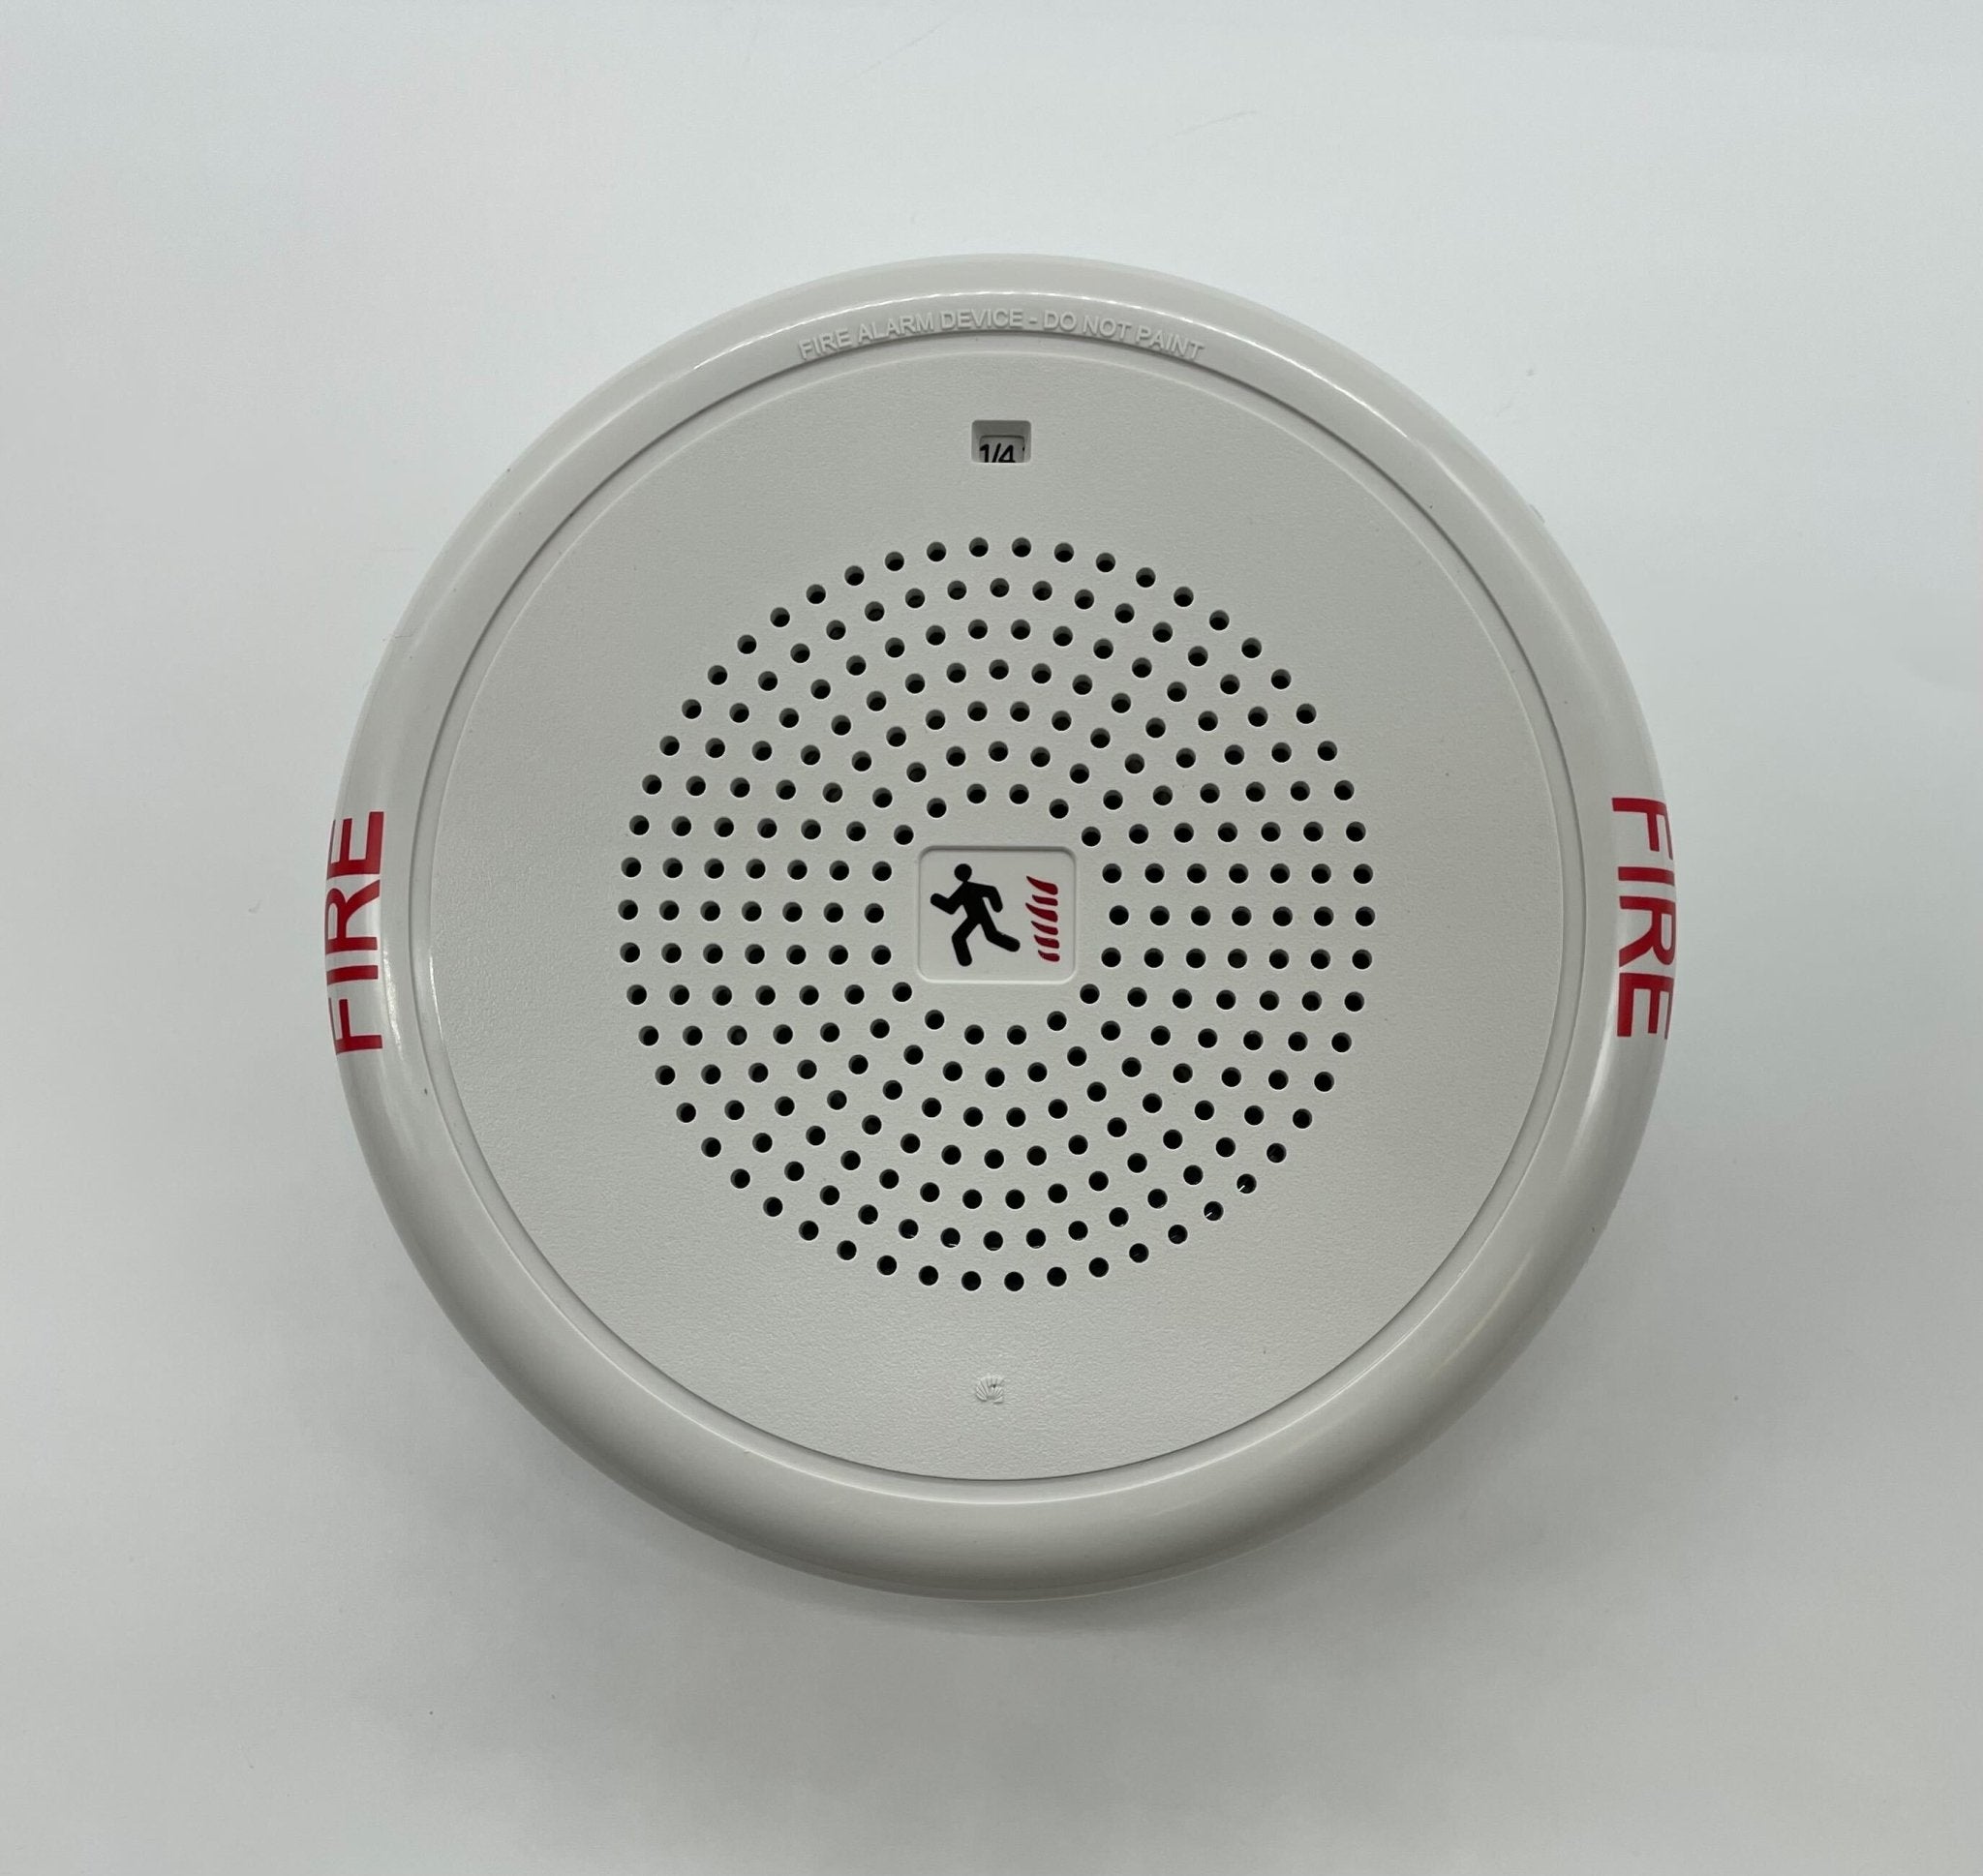 Edwards GCF-S7 - The Fire Alarm Supplier